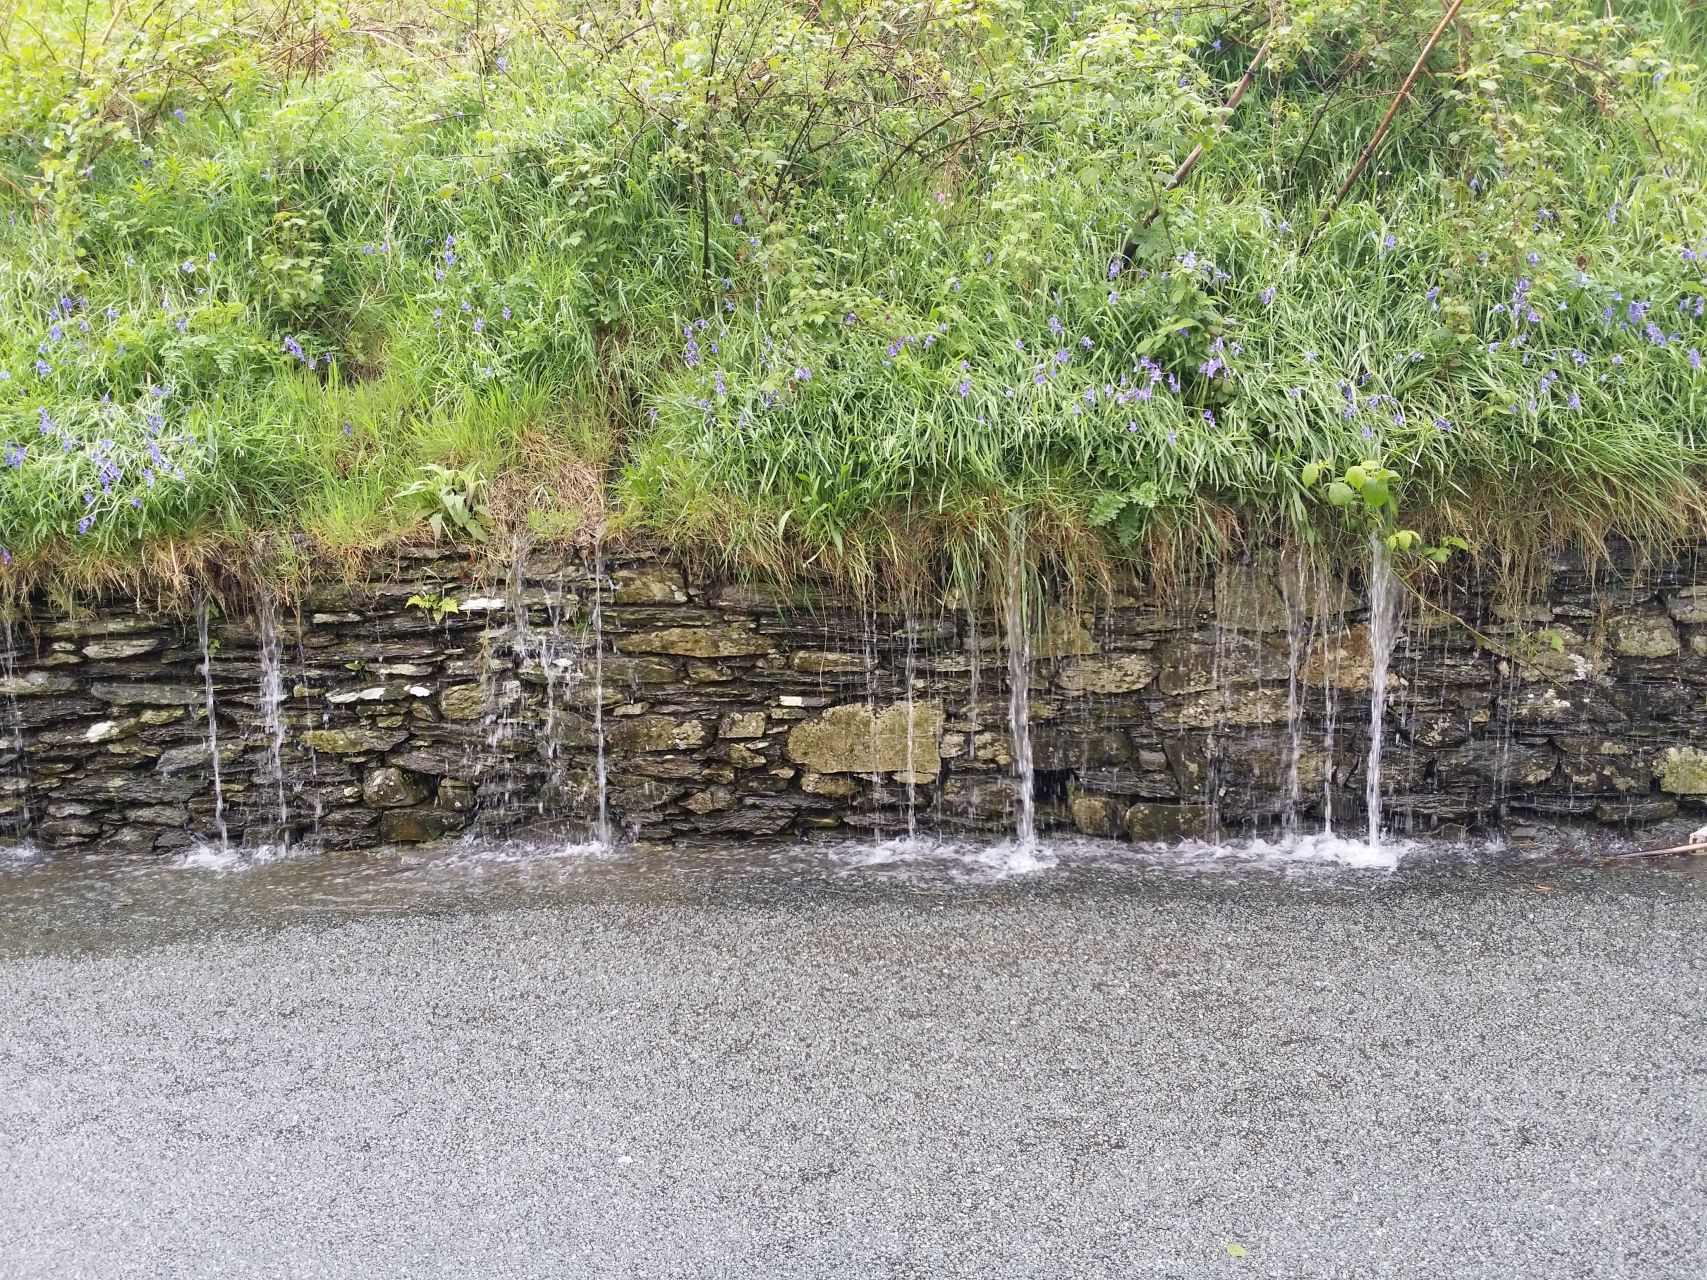 Day 2 - Cwm Penmachno valley in the rain